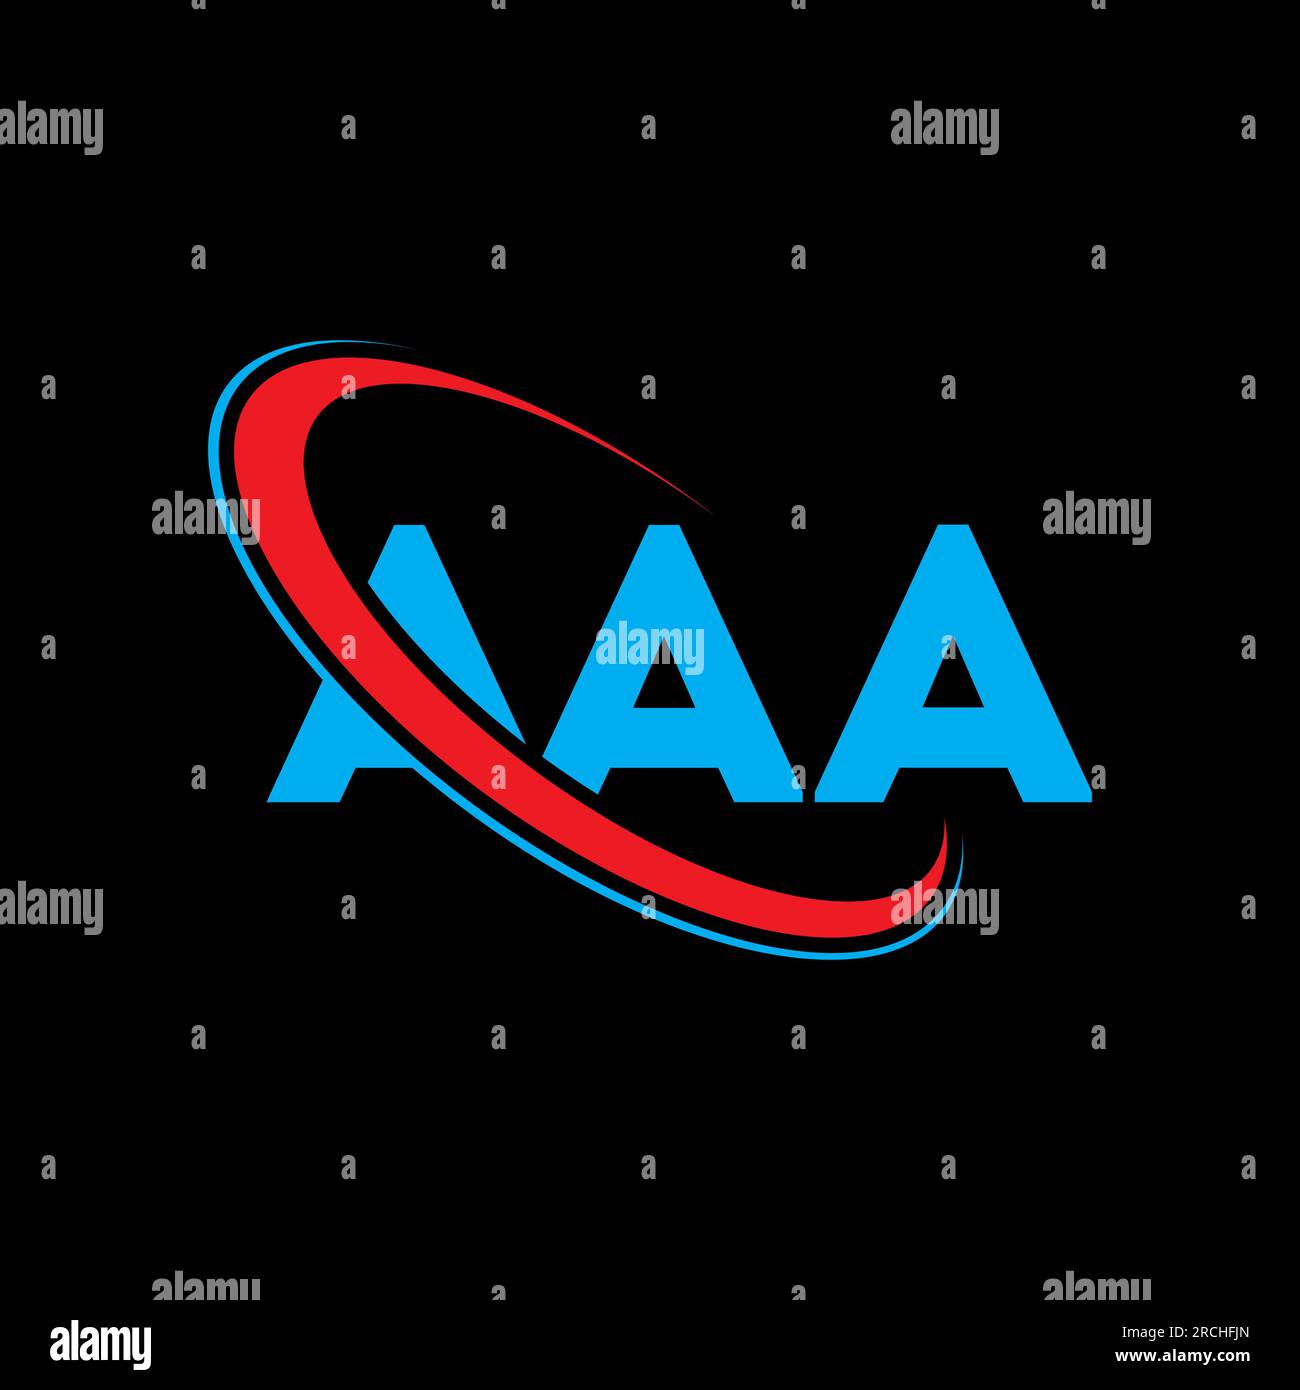 AAA-Logo. AAA-Buchstabe. Logo mit AAA-Buchstaben. Initialen AAA-Logo, verbunden mit einem Kreis und einem Monogramm-Logo in Großbuchstaben. AAA-Typographie für Technologie. Stock Vektor